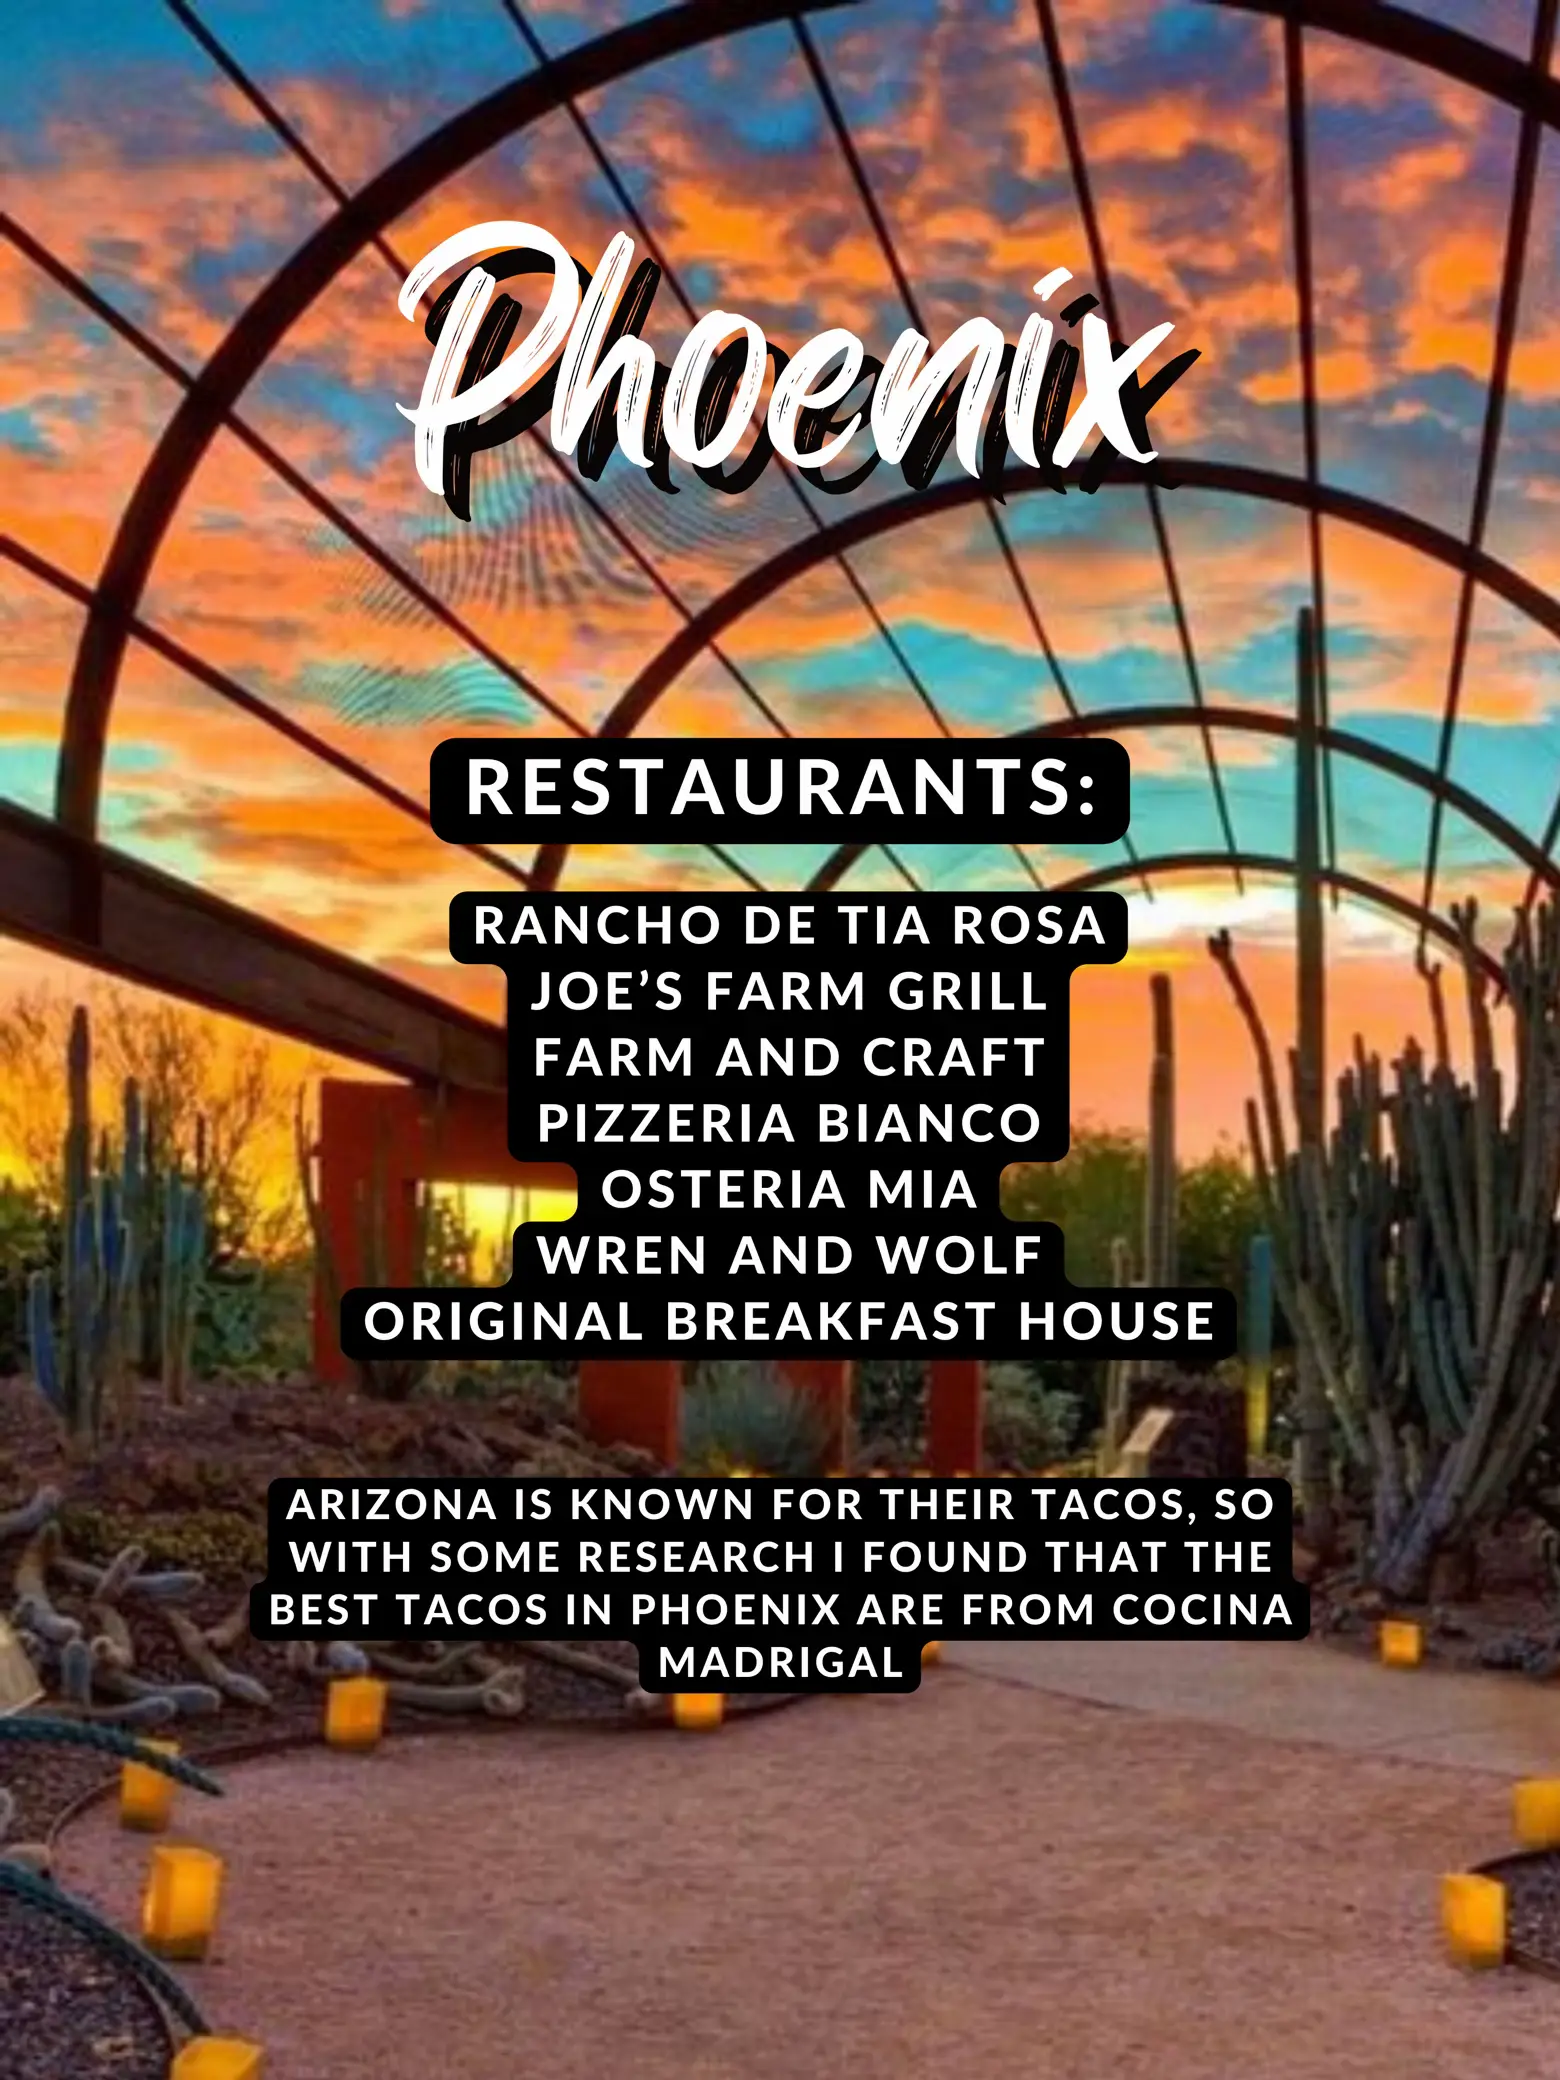  A list of restaurants in Phoenix